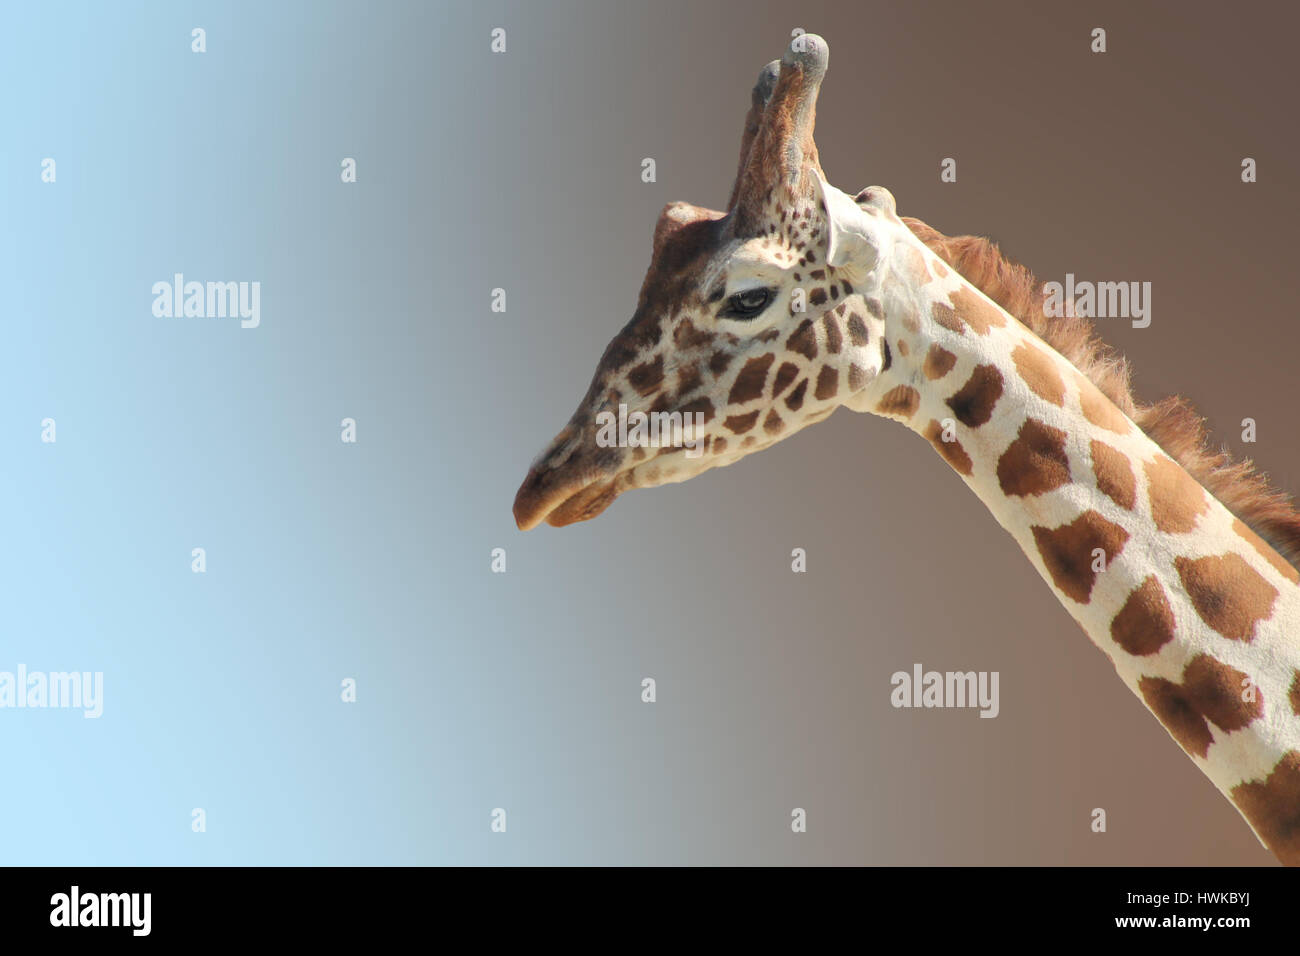 Funny yang giraffe's face isolated close up Stock Photo